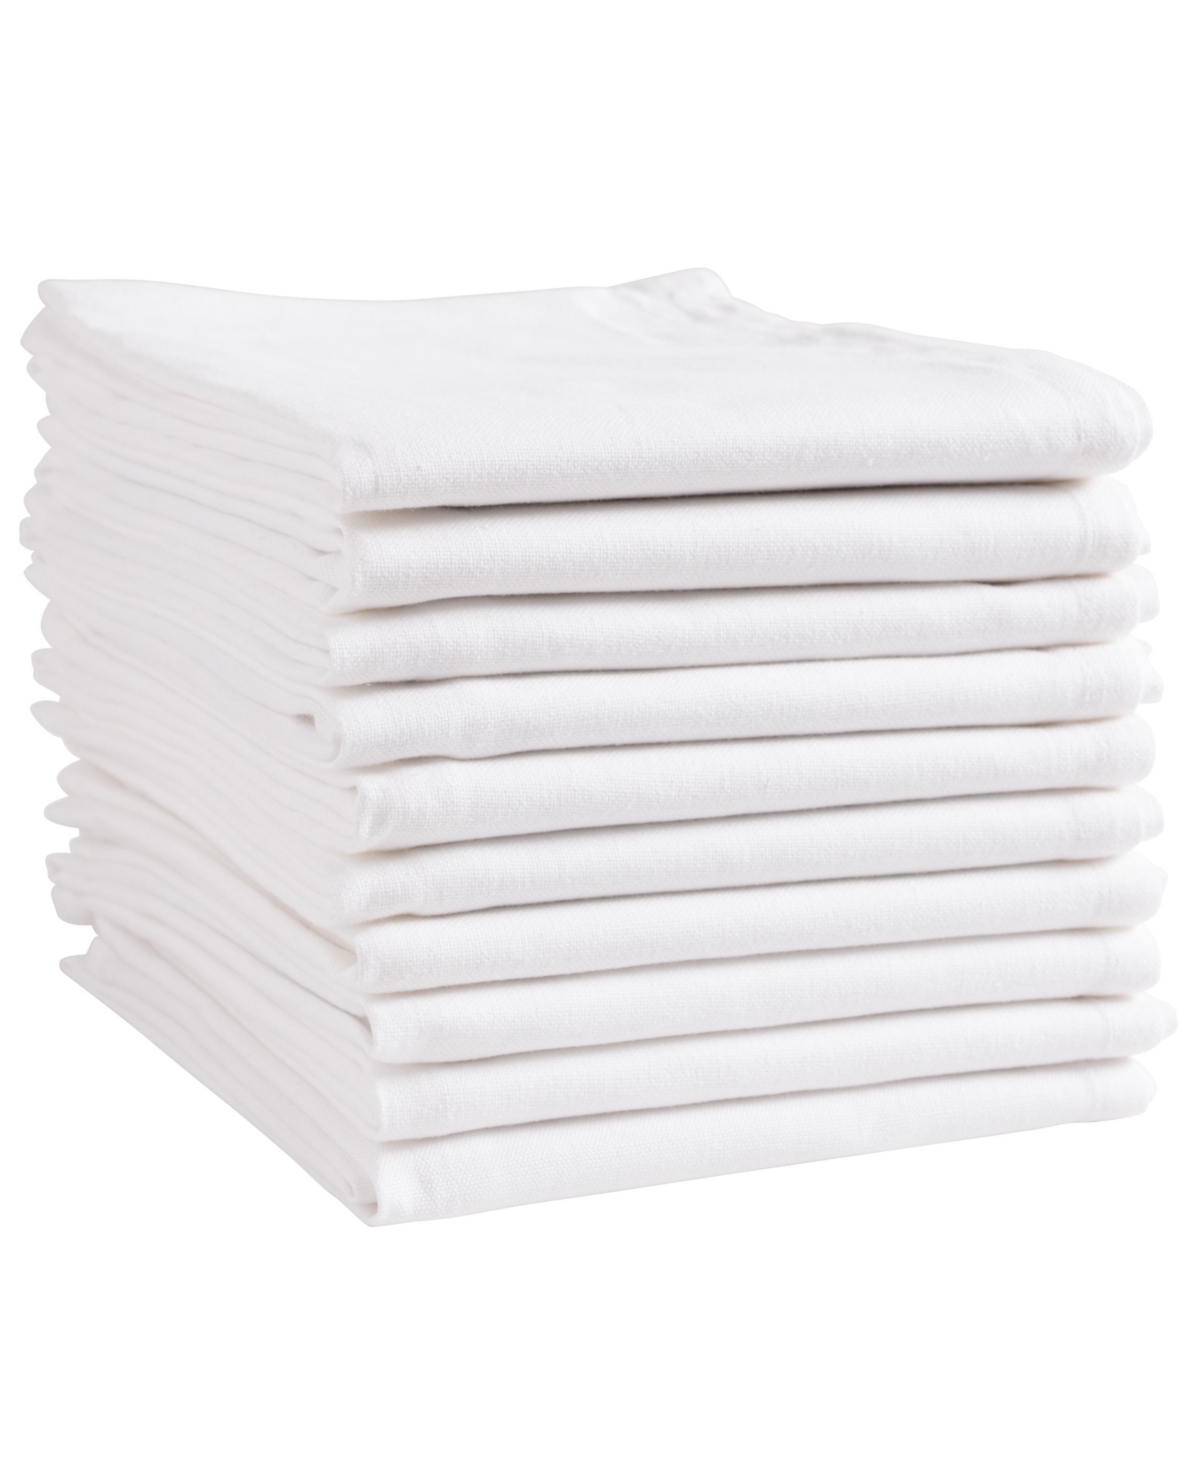 Cotton 10 Piece Kitchen Dish Towel, 20" x 30" - White